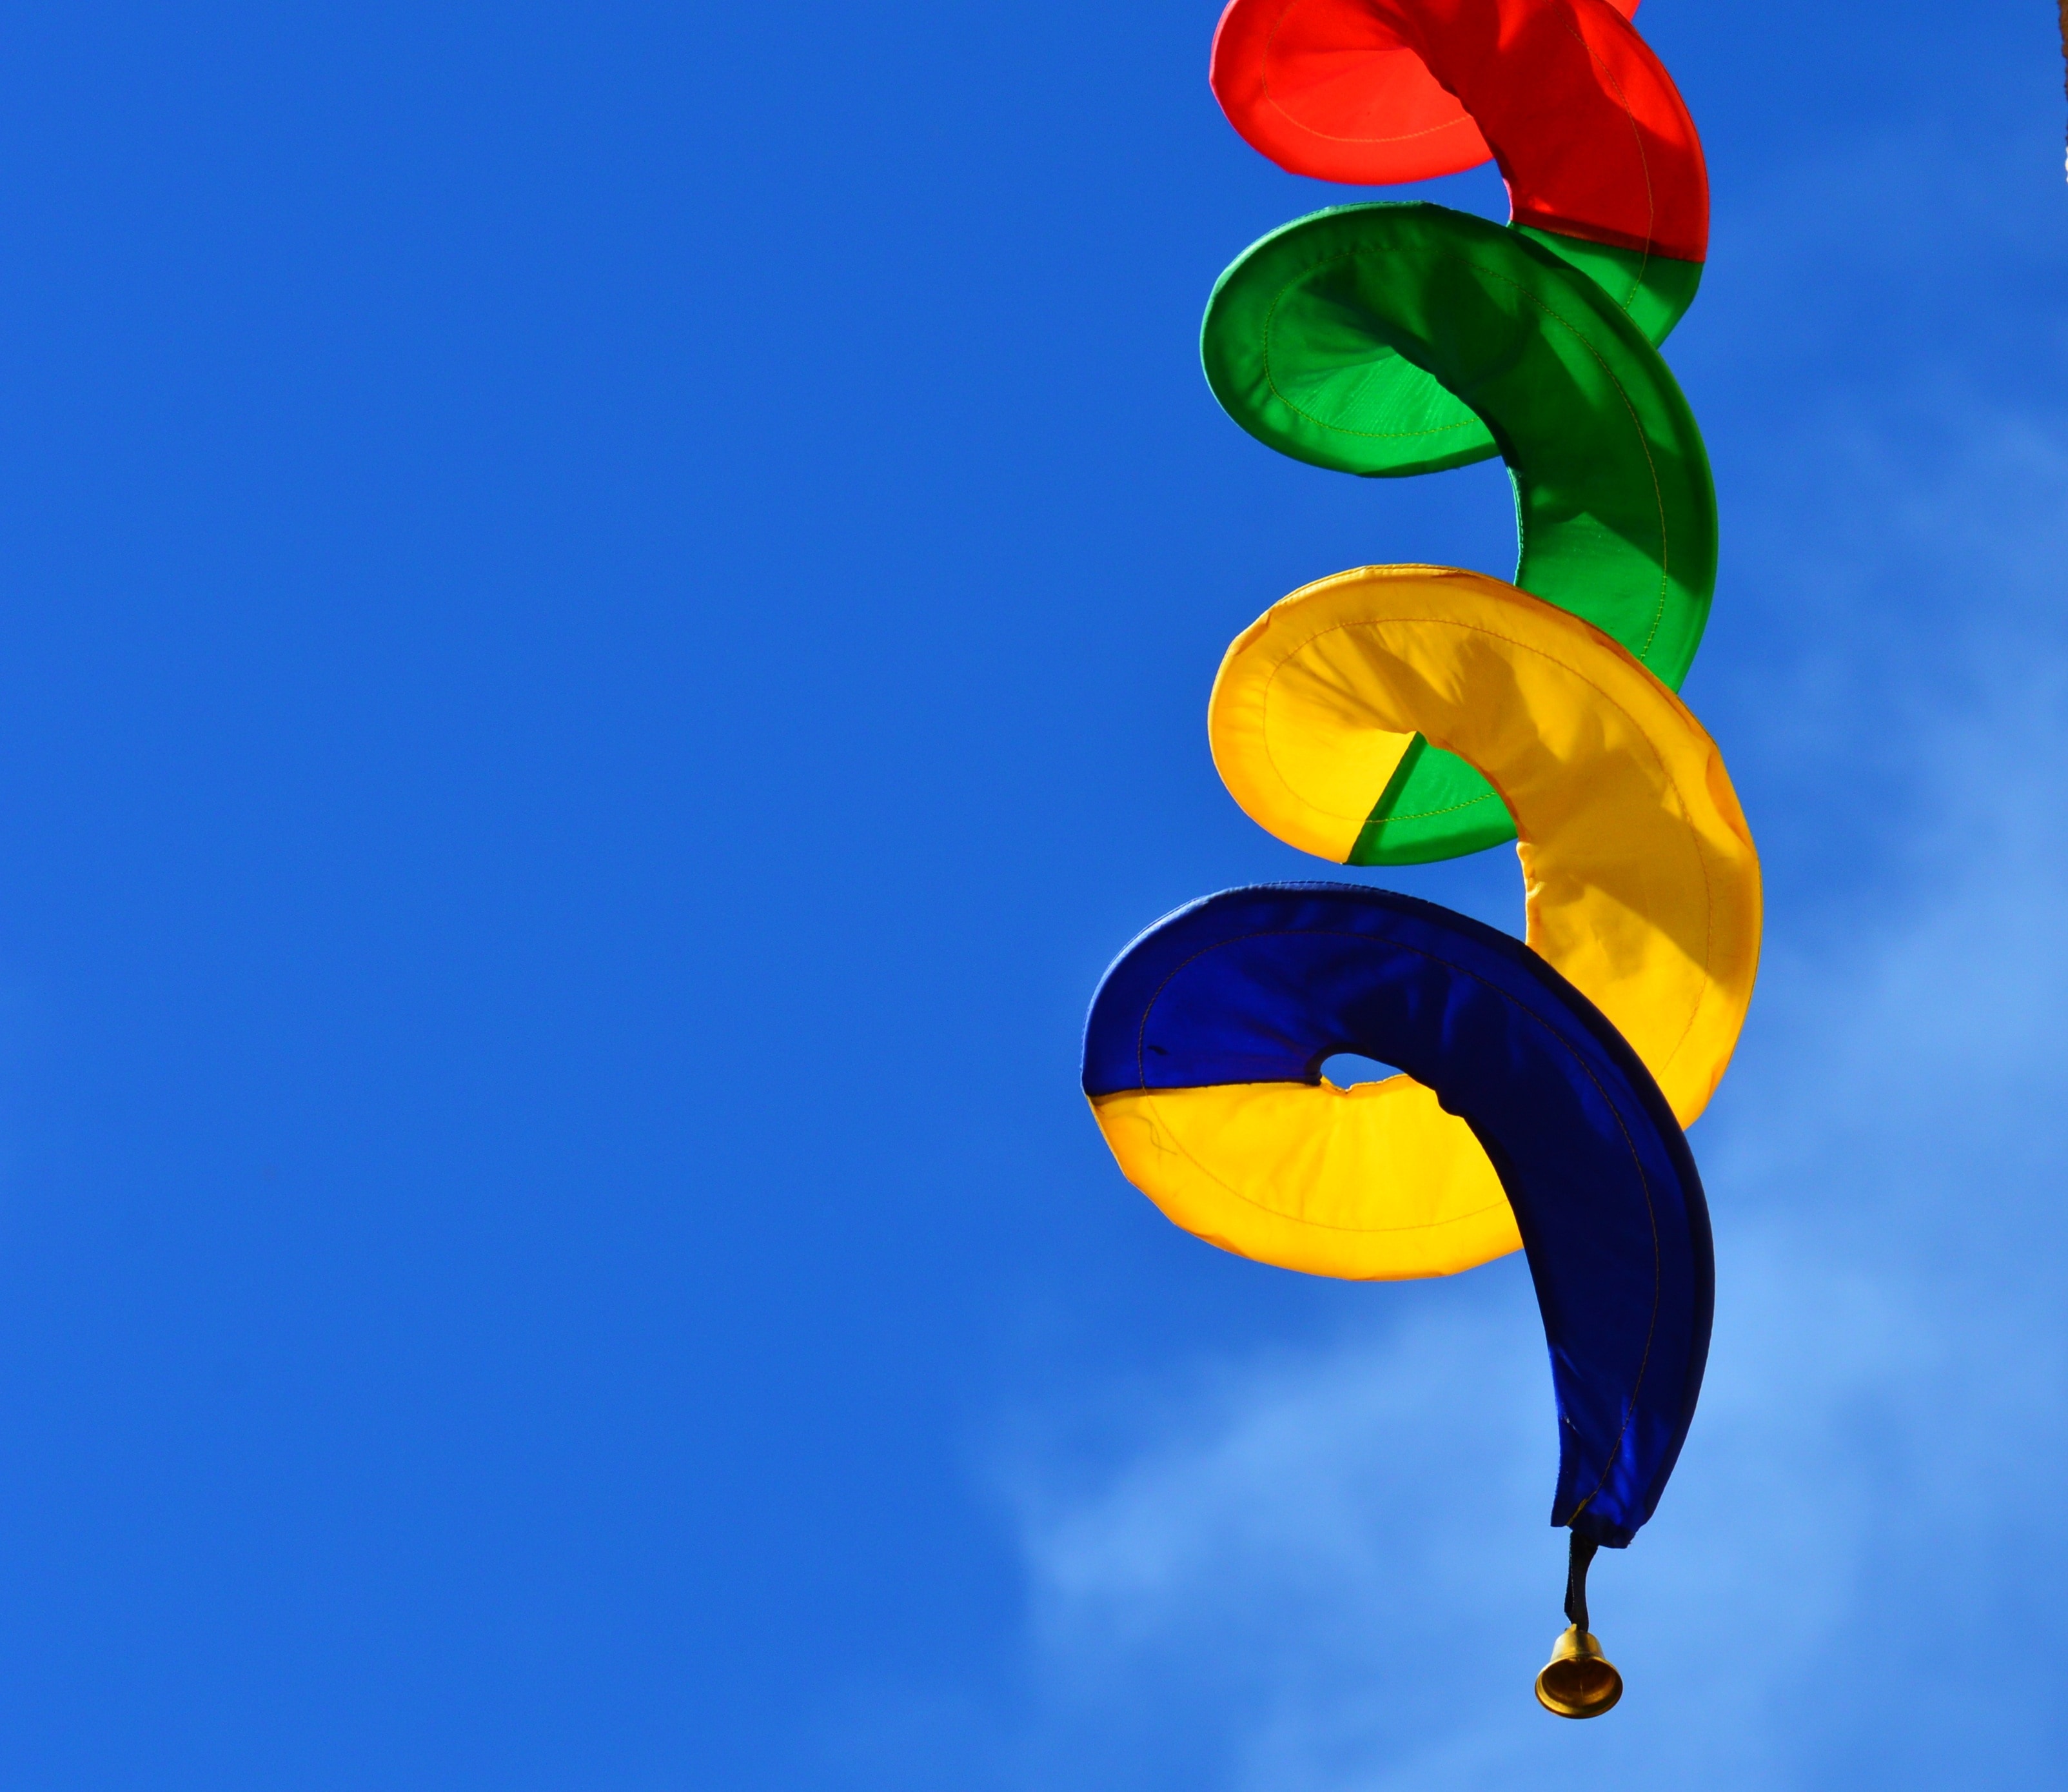 Spiral, Colorful, Wind, Windspiel, Turn, blue, multi colored